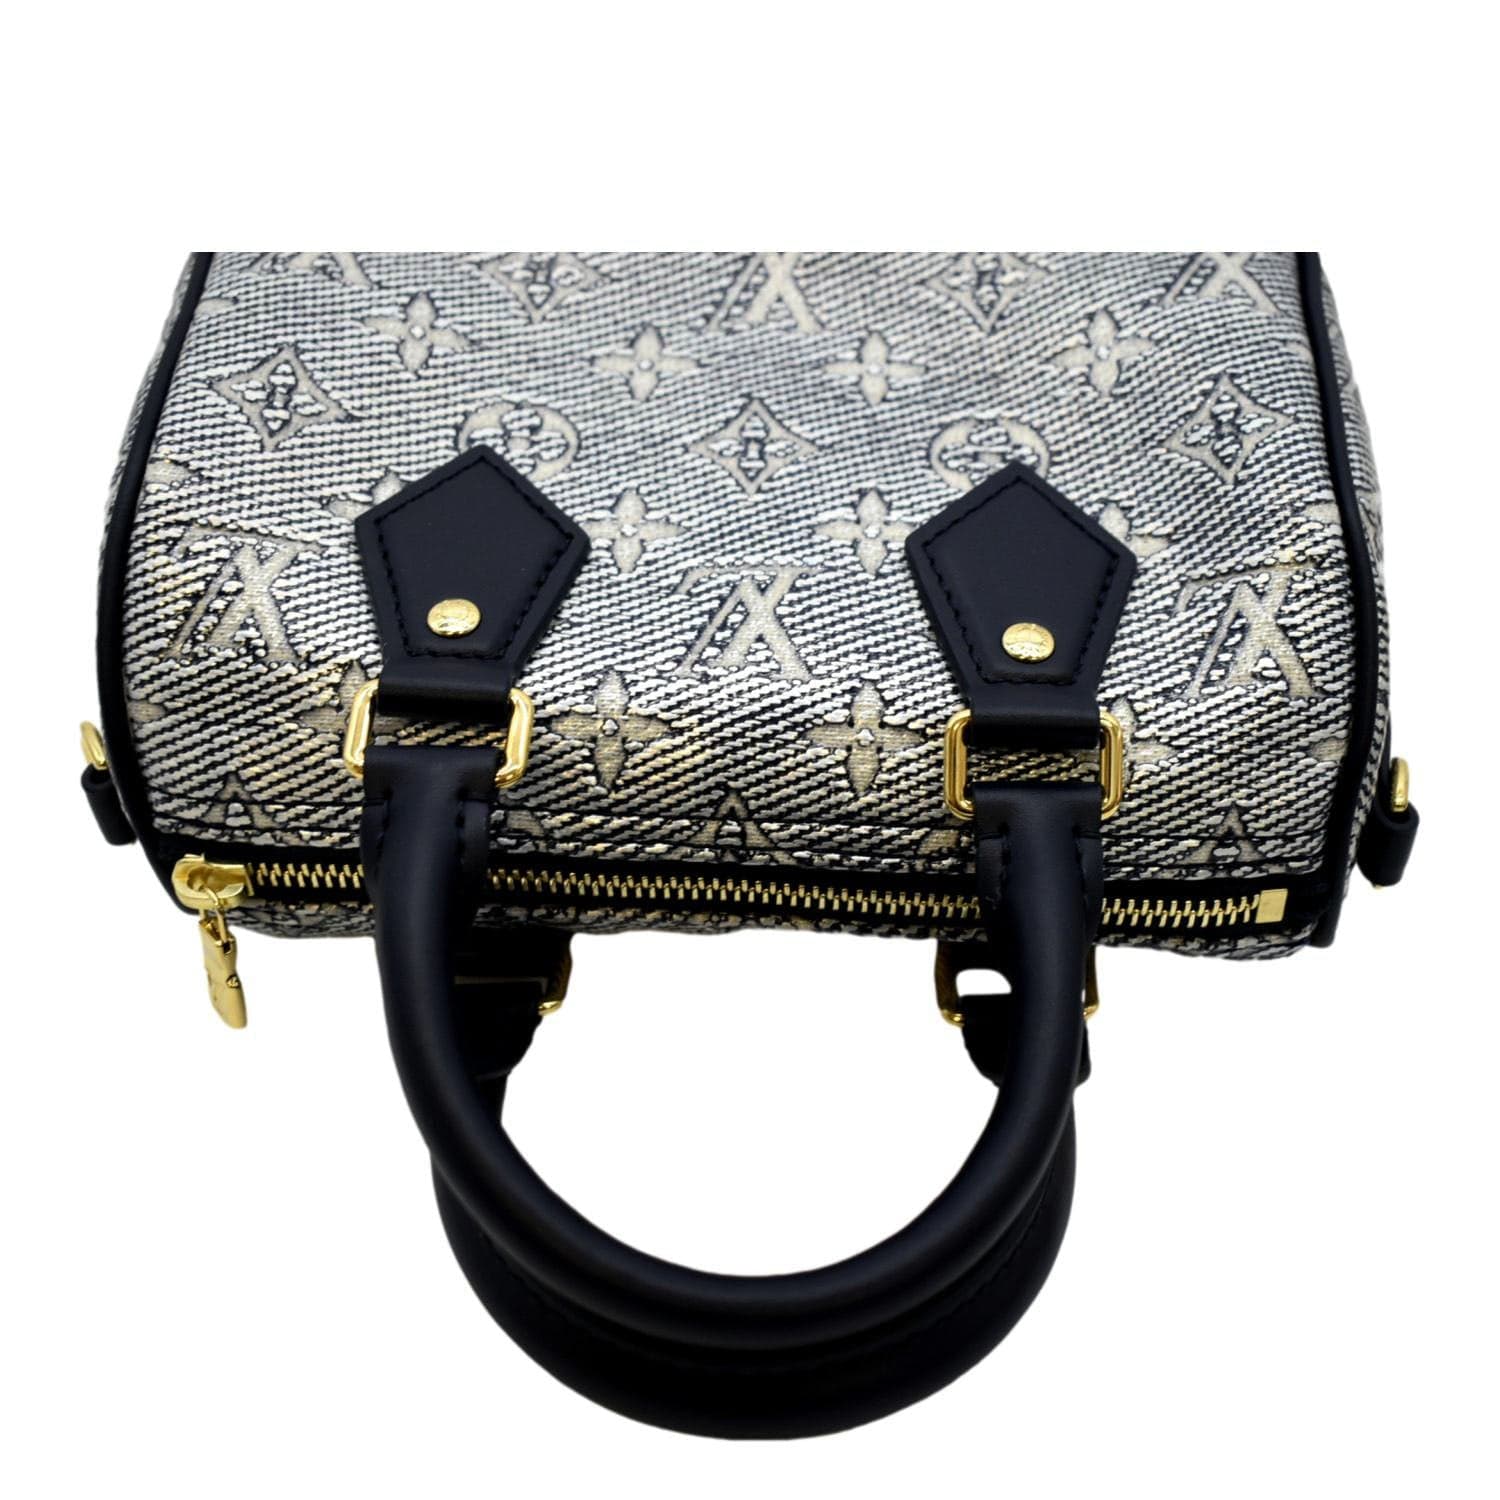 Speedy Bandoulière 20 H27 - Women - Handbags